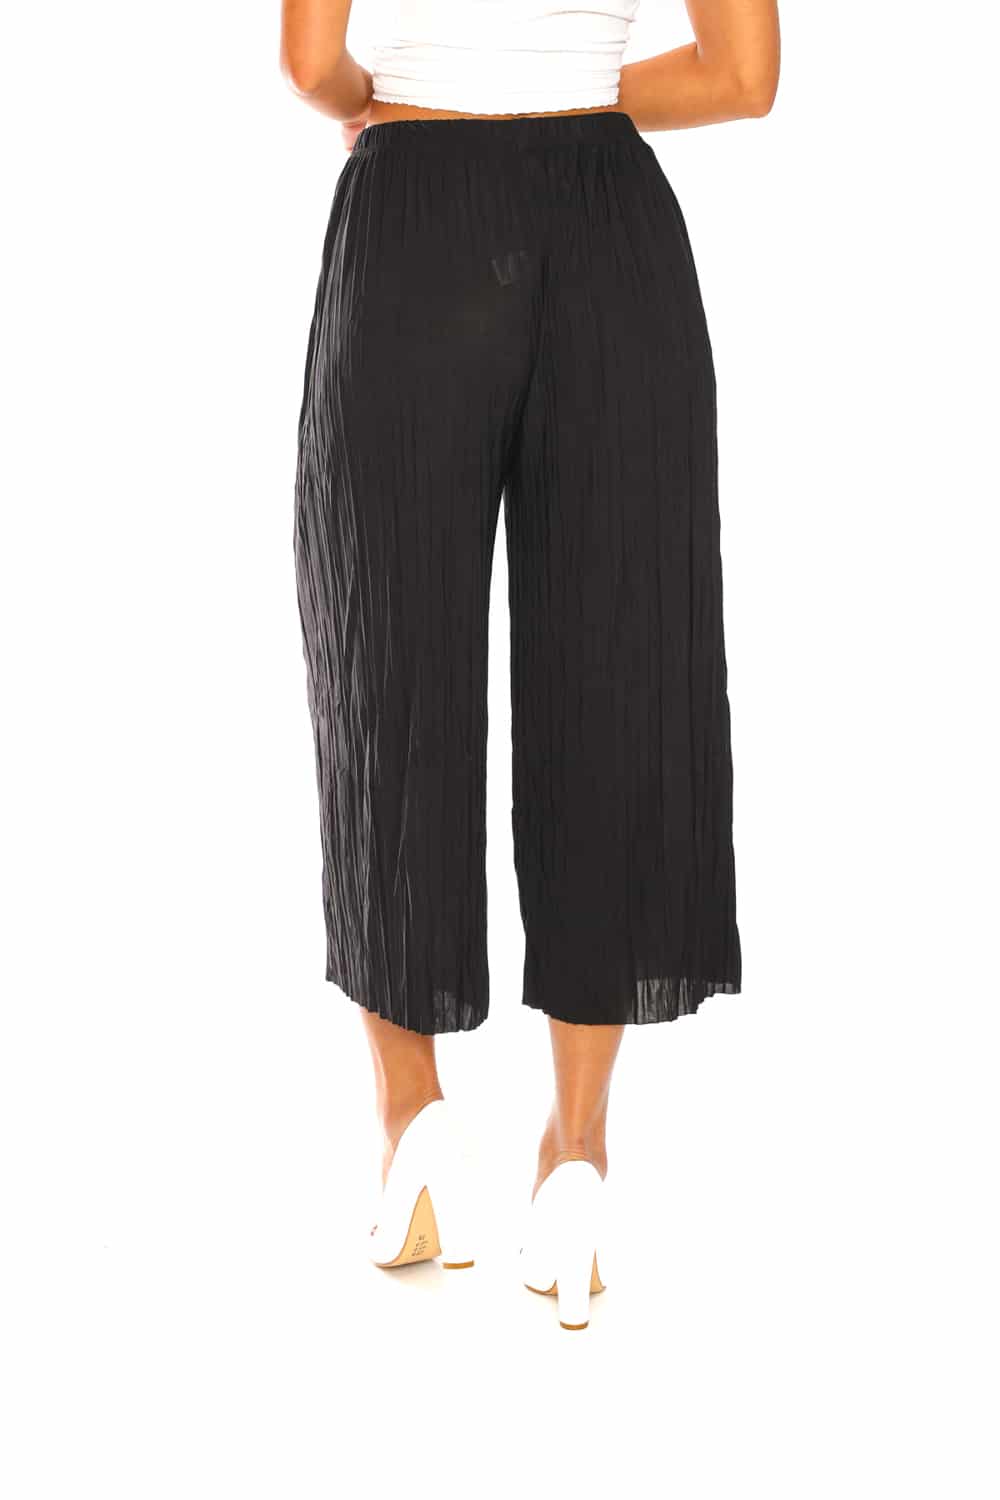 Black Culotte Pants with Pleats - 5